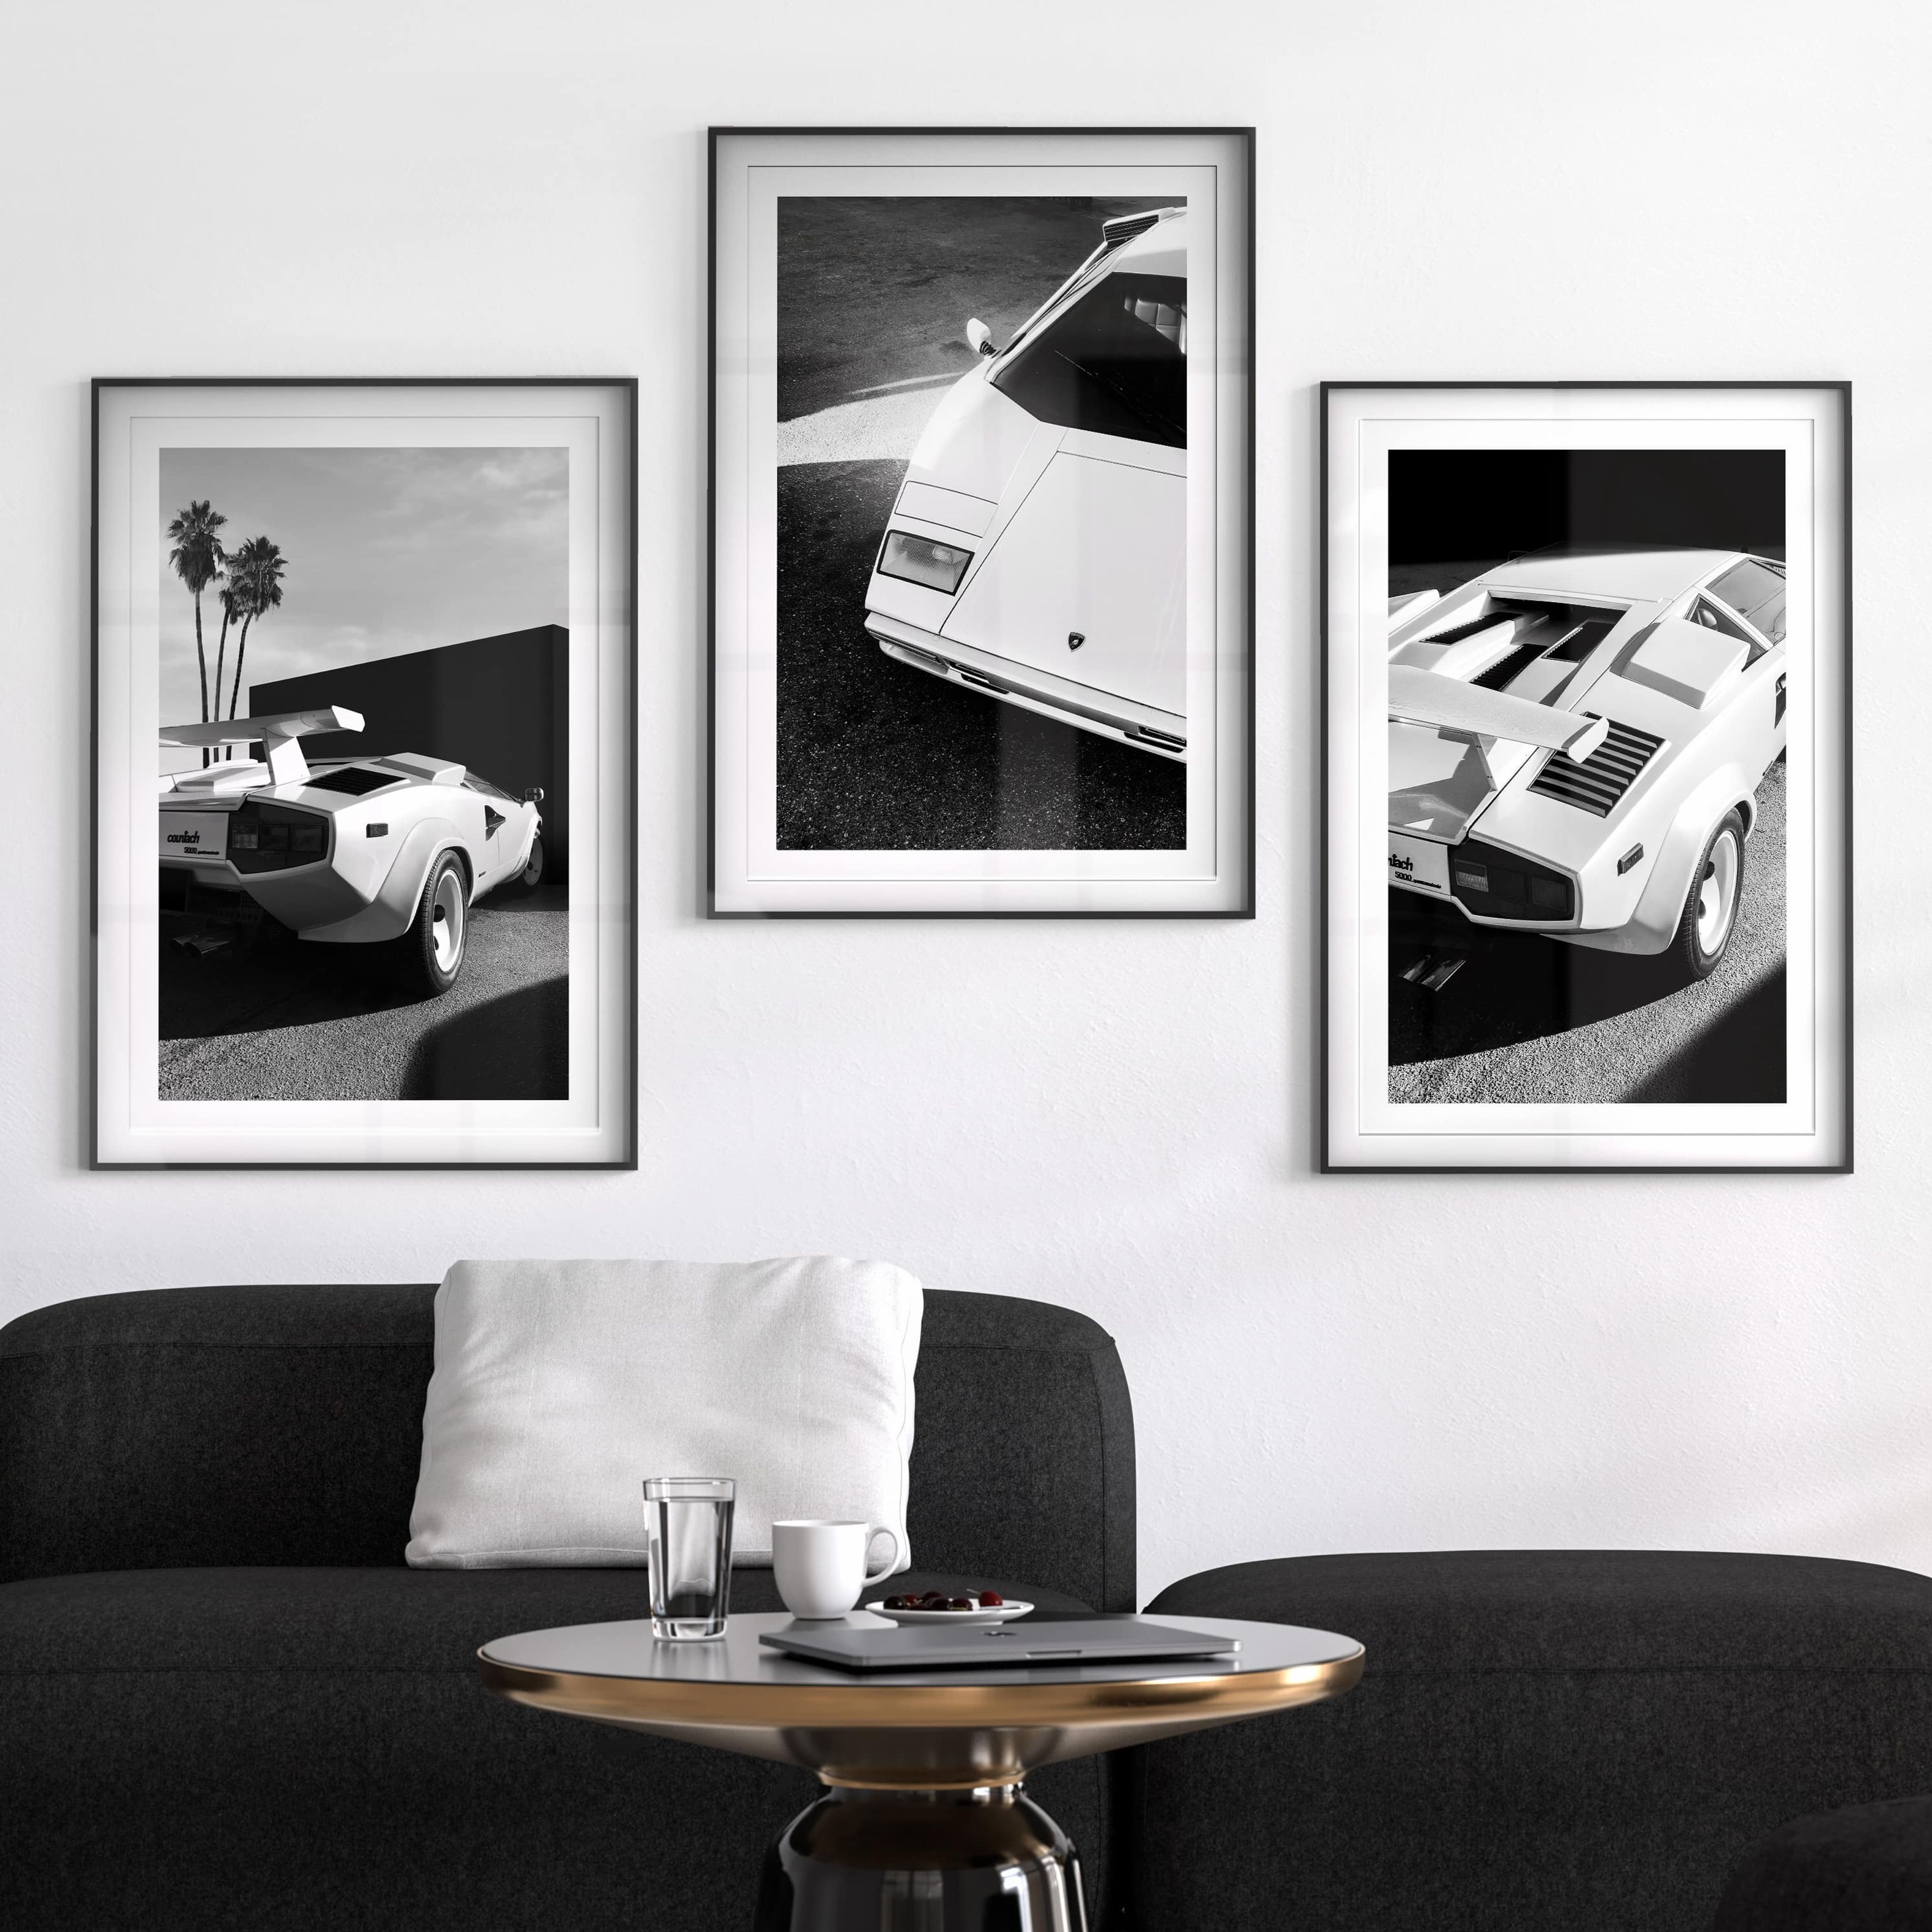 Lamborghini Countach, Palm Trees Black & White Print